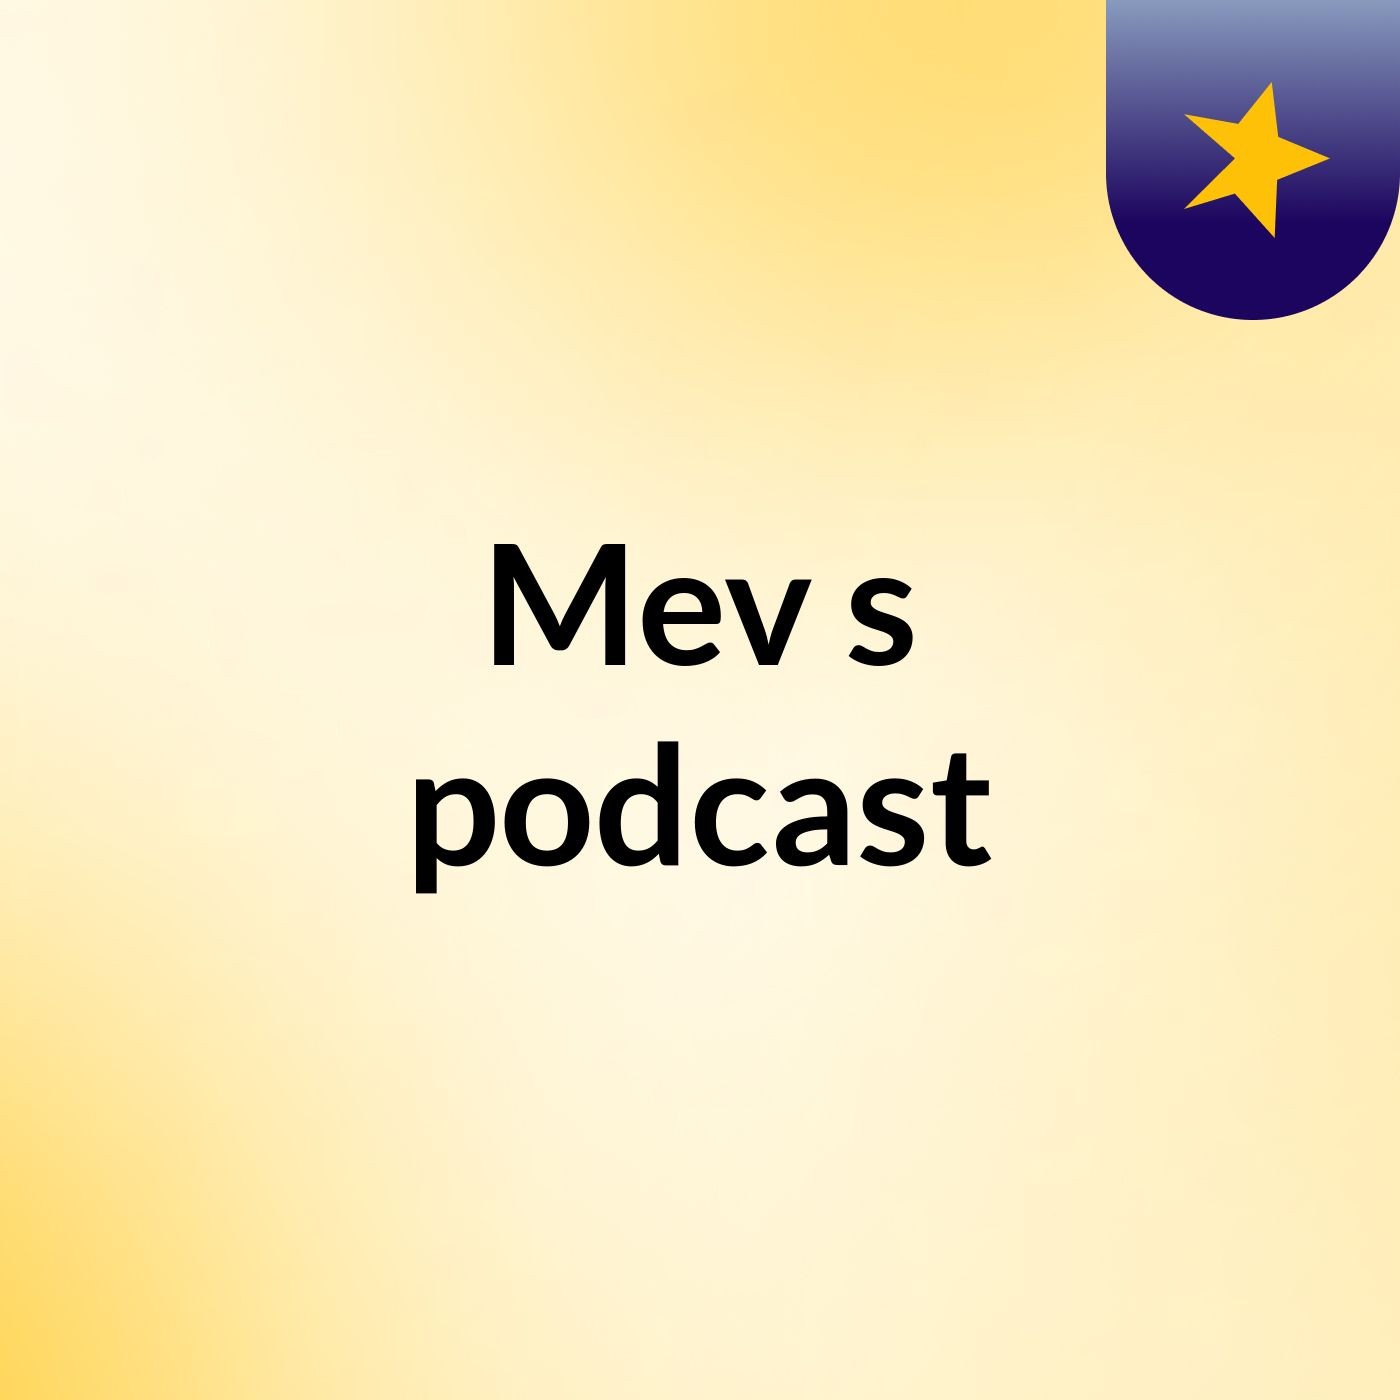 Mev's podcast